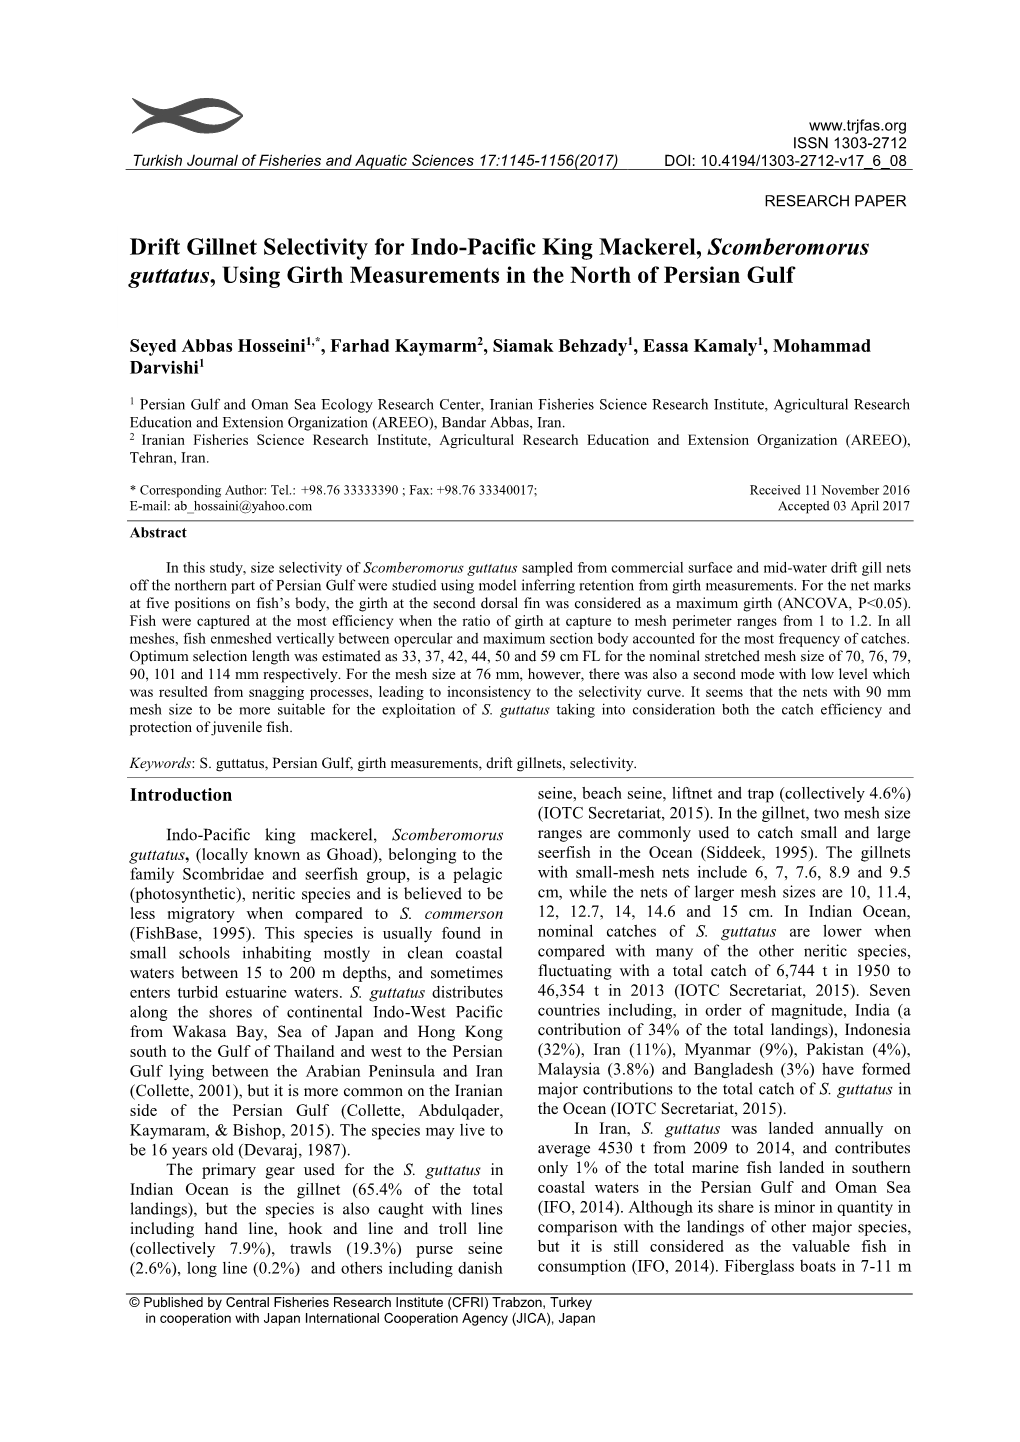 Drift Gillnet Selectivity for Indo-Pacific King Mackerel, Scomberomorus Guttatus, Using Girth Measurements in the North of Persian Gulf